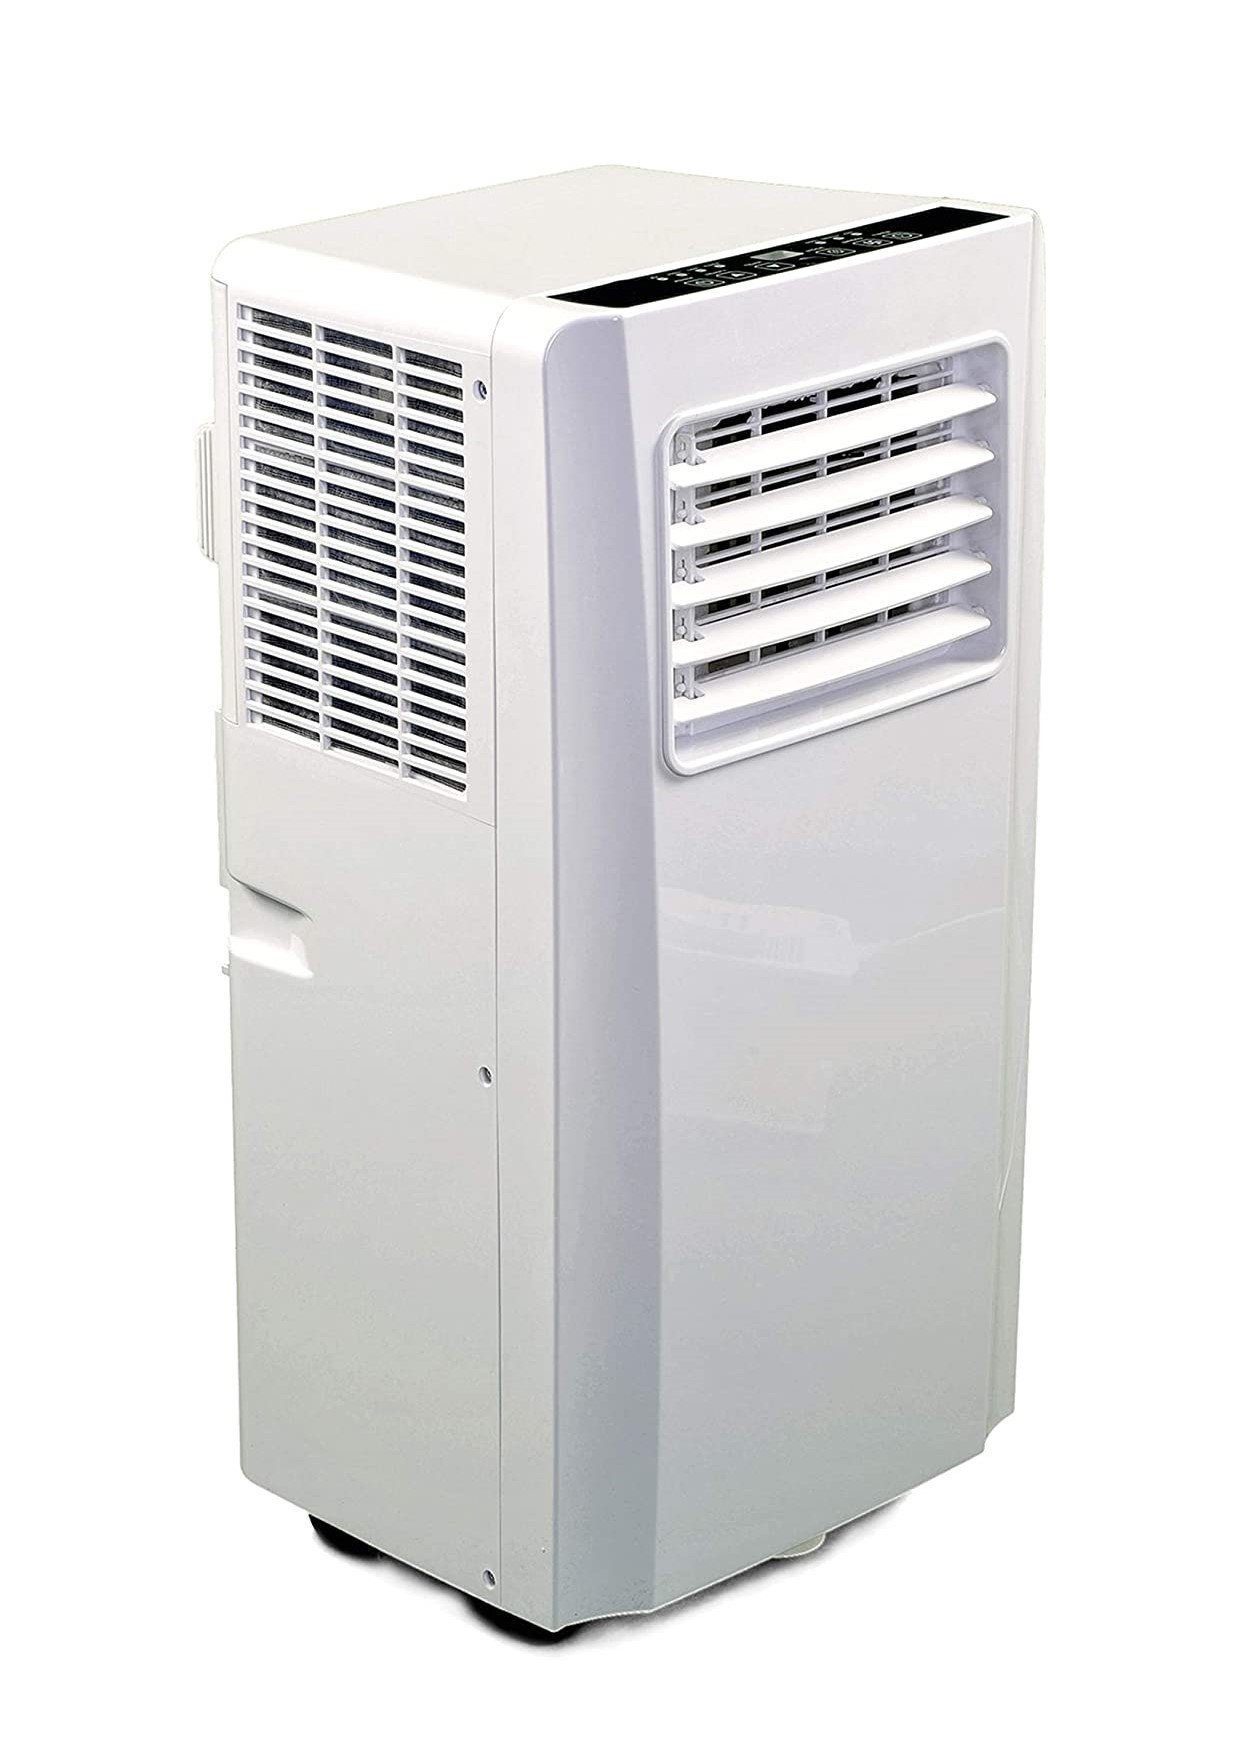 JUNG Klimagerät TV03 mobile Klimaanlage mit Fernbedienung 2.0 KW, mobiles Klimagerät, 7000 BTU leise, Abluftschlauch, Timer Airconditioner Luftkühler Mobil